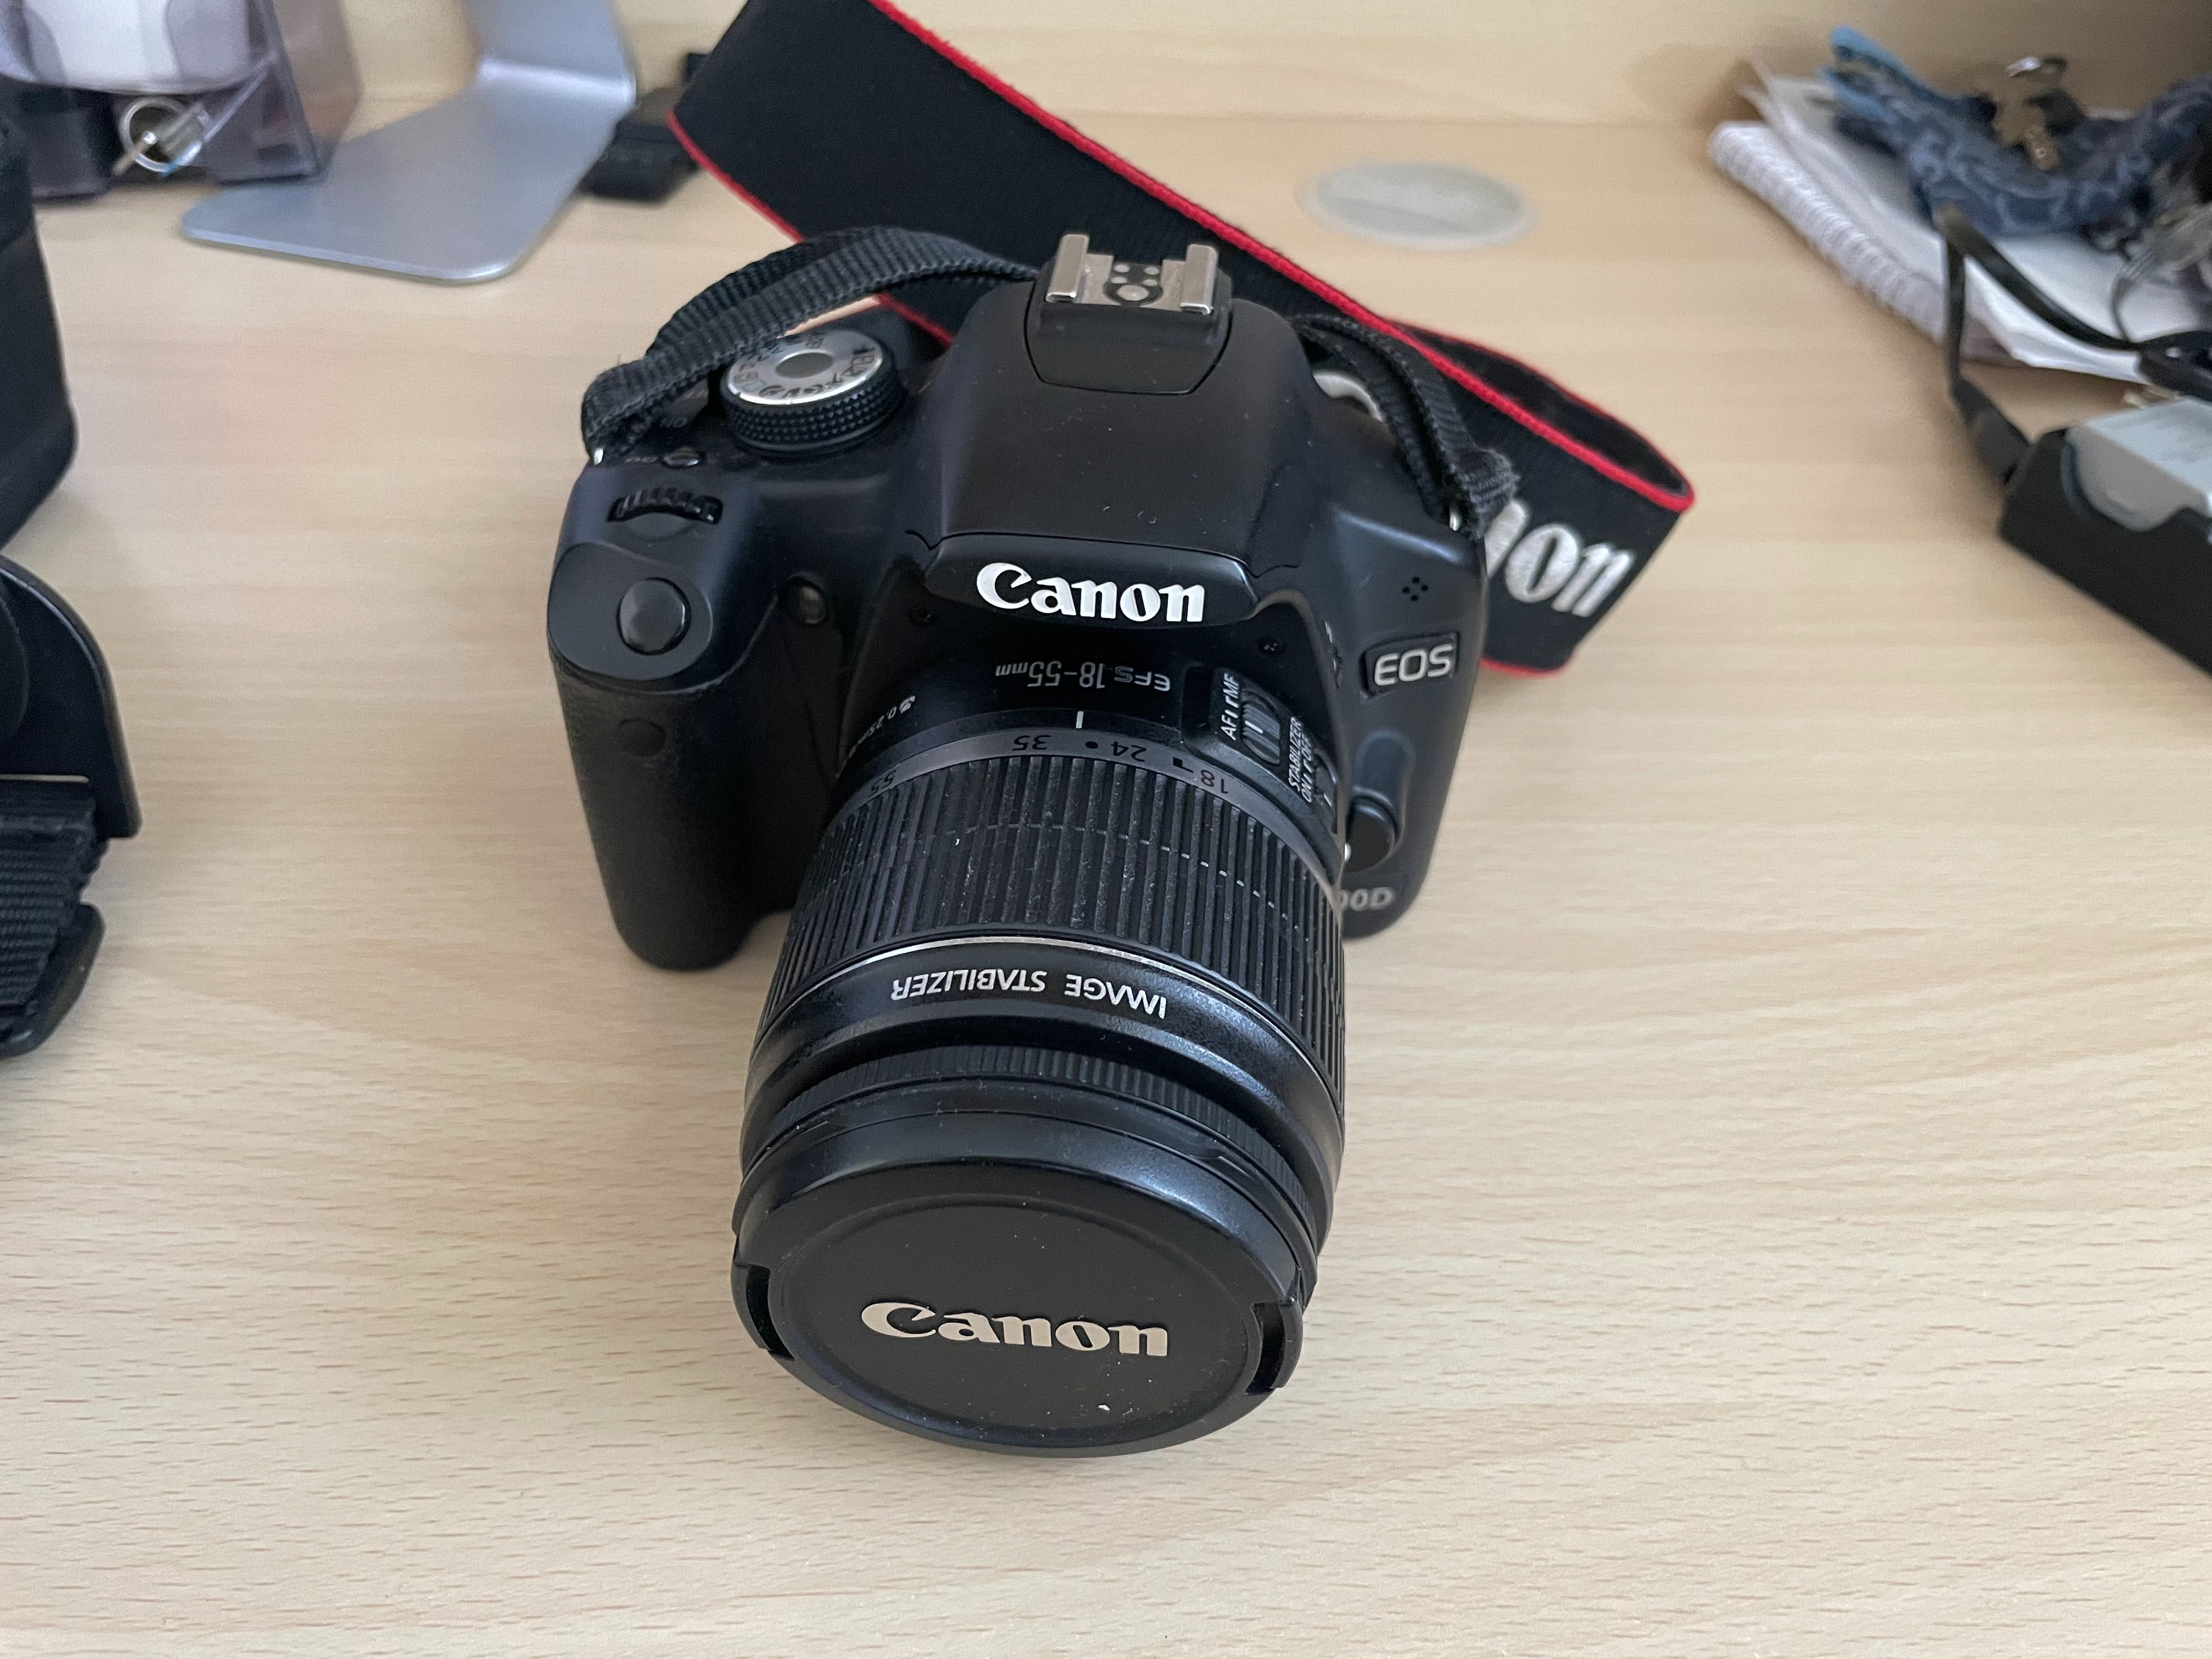 Фотоаппарат Canon EOS 500D